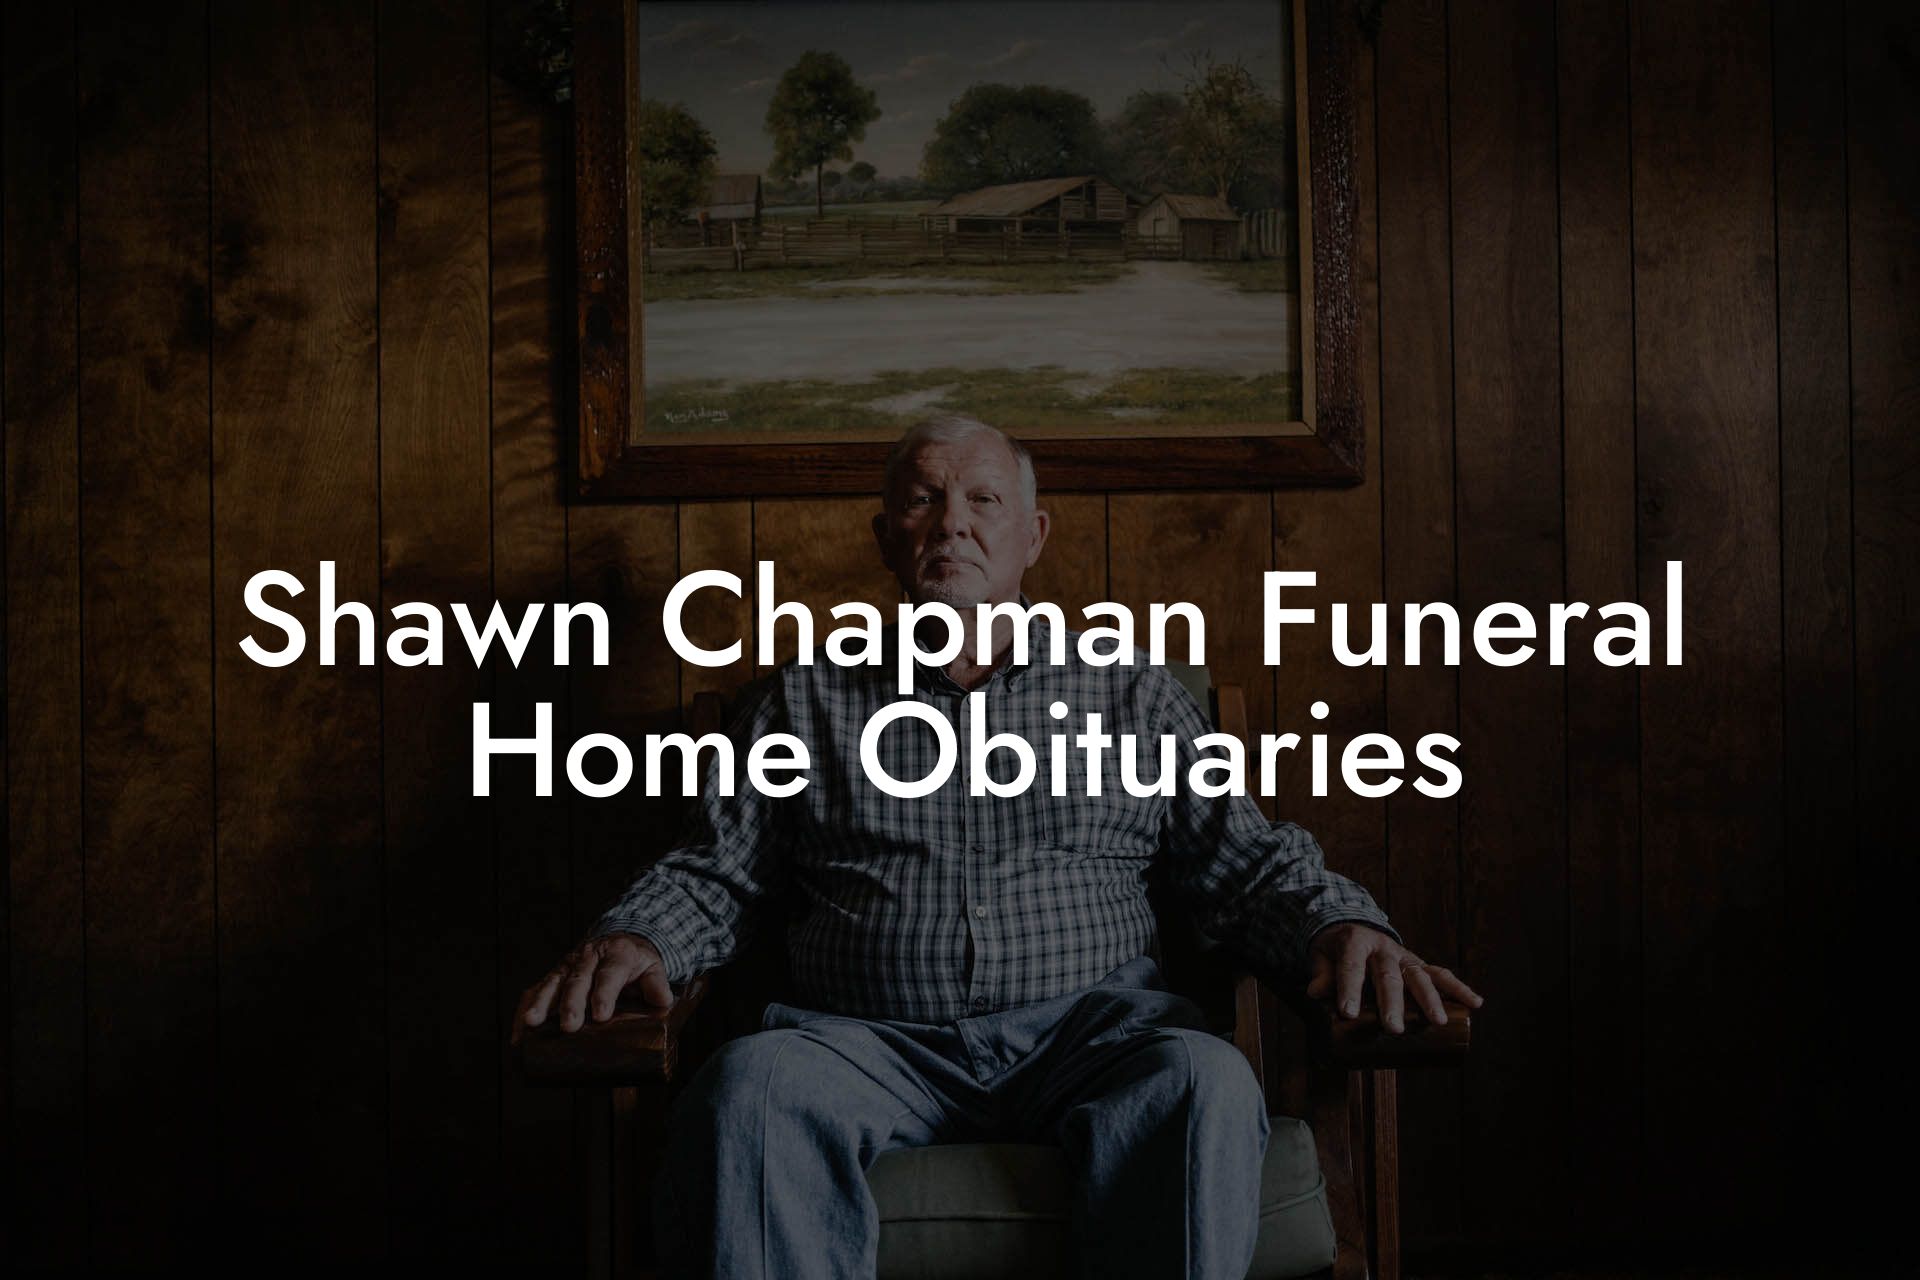 Shawn Chapman Funeral Home Obituaries